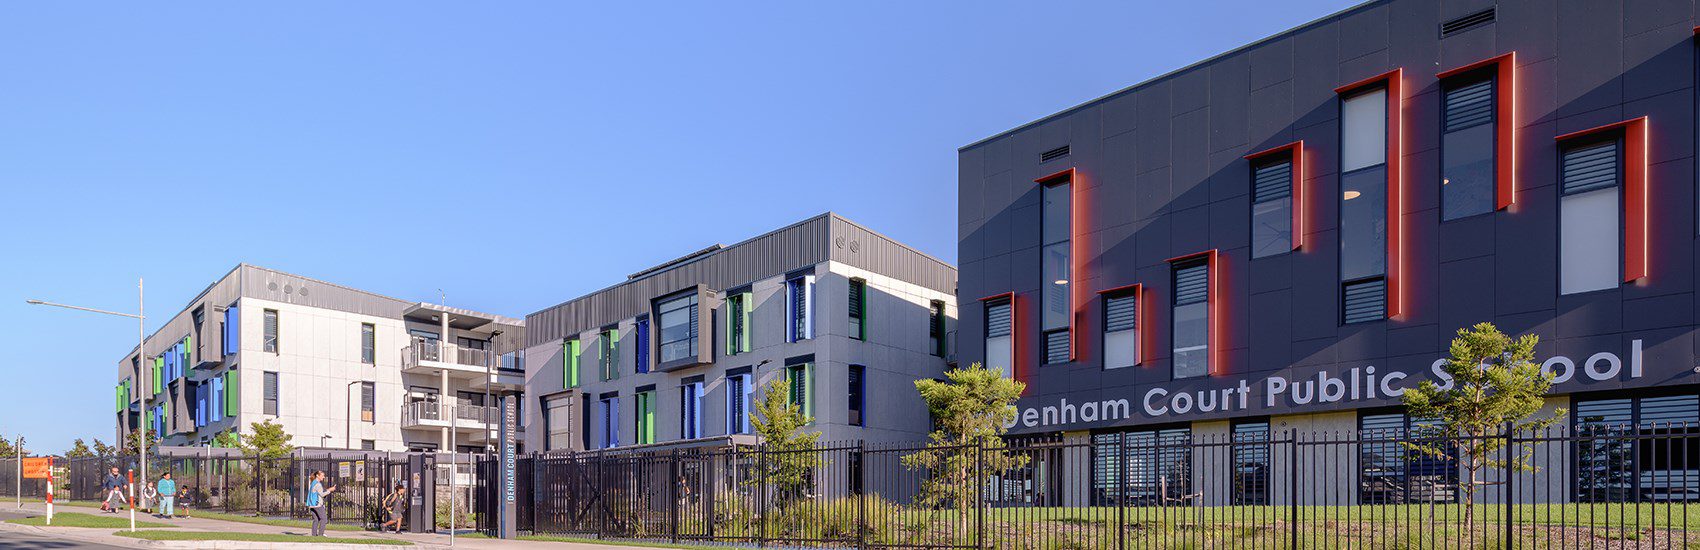 Denham Court Primary School – Inspired Surrounds